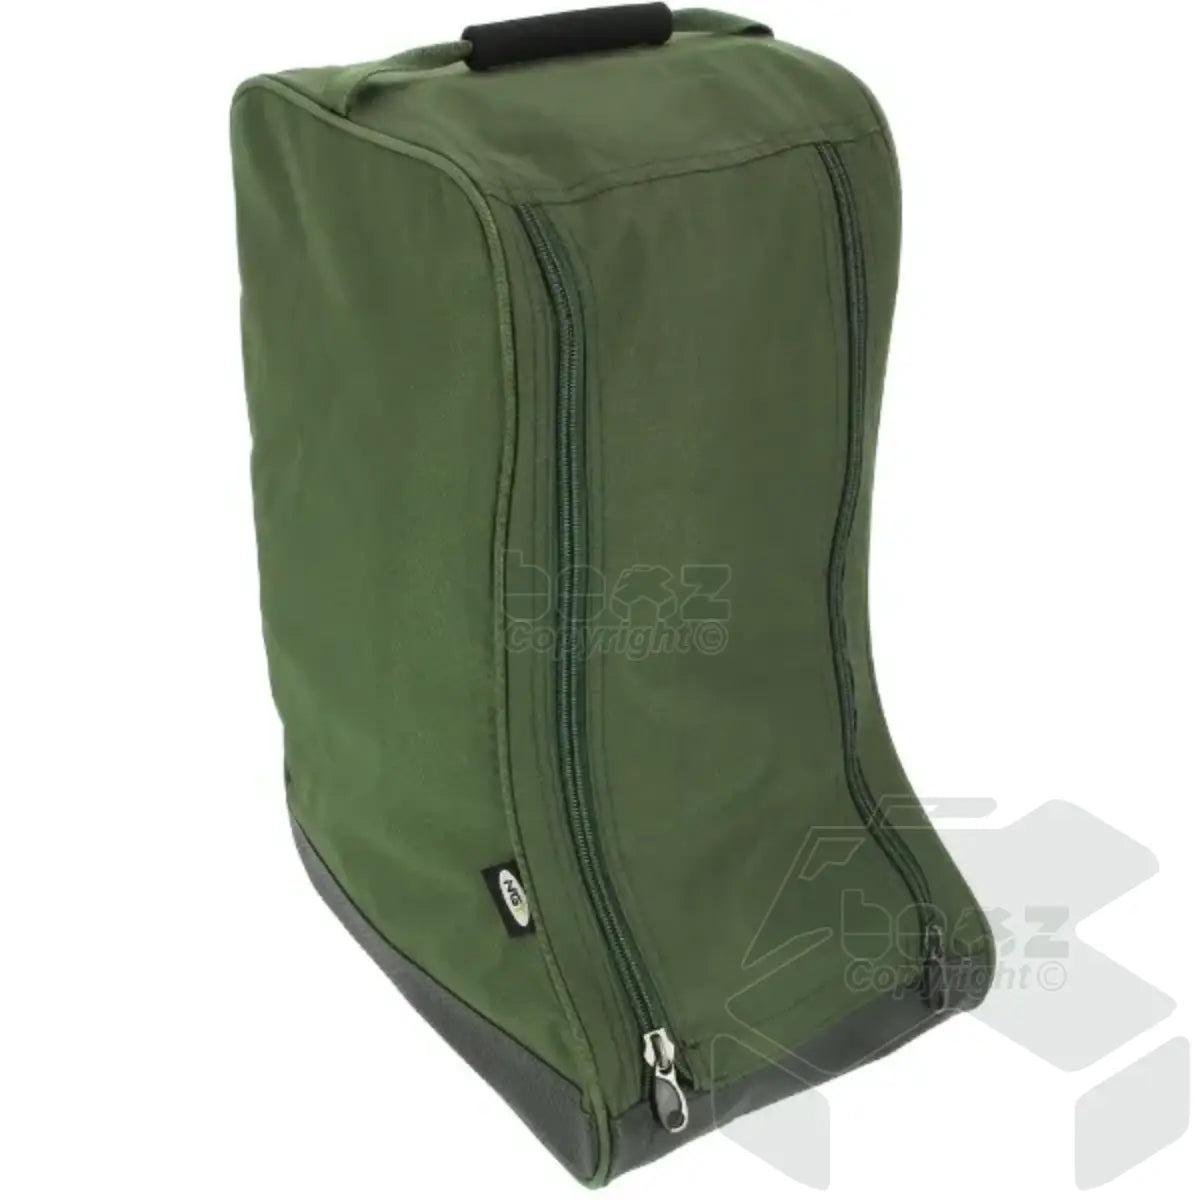 NGT Boot Bag - Wellington Boot Style Bag